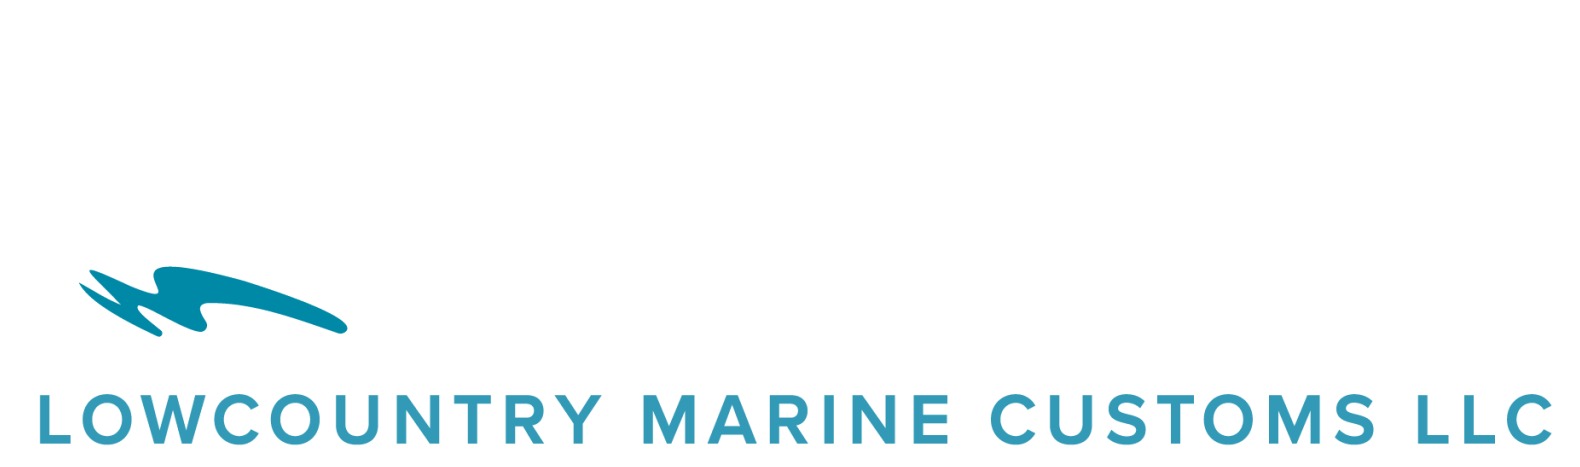 Lowcountry Marine Customs